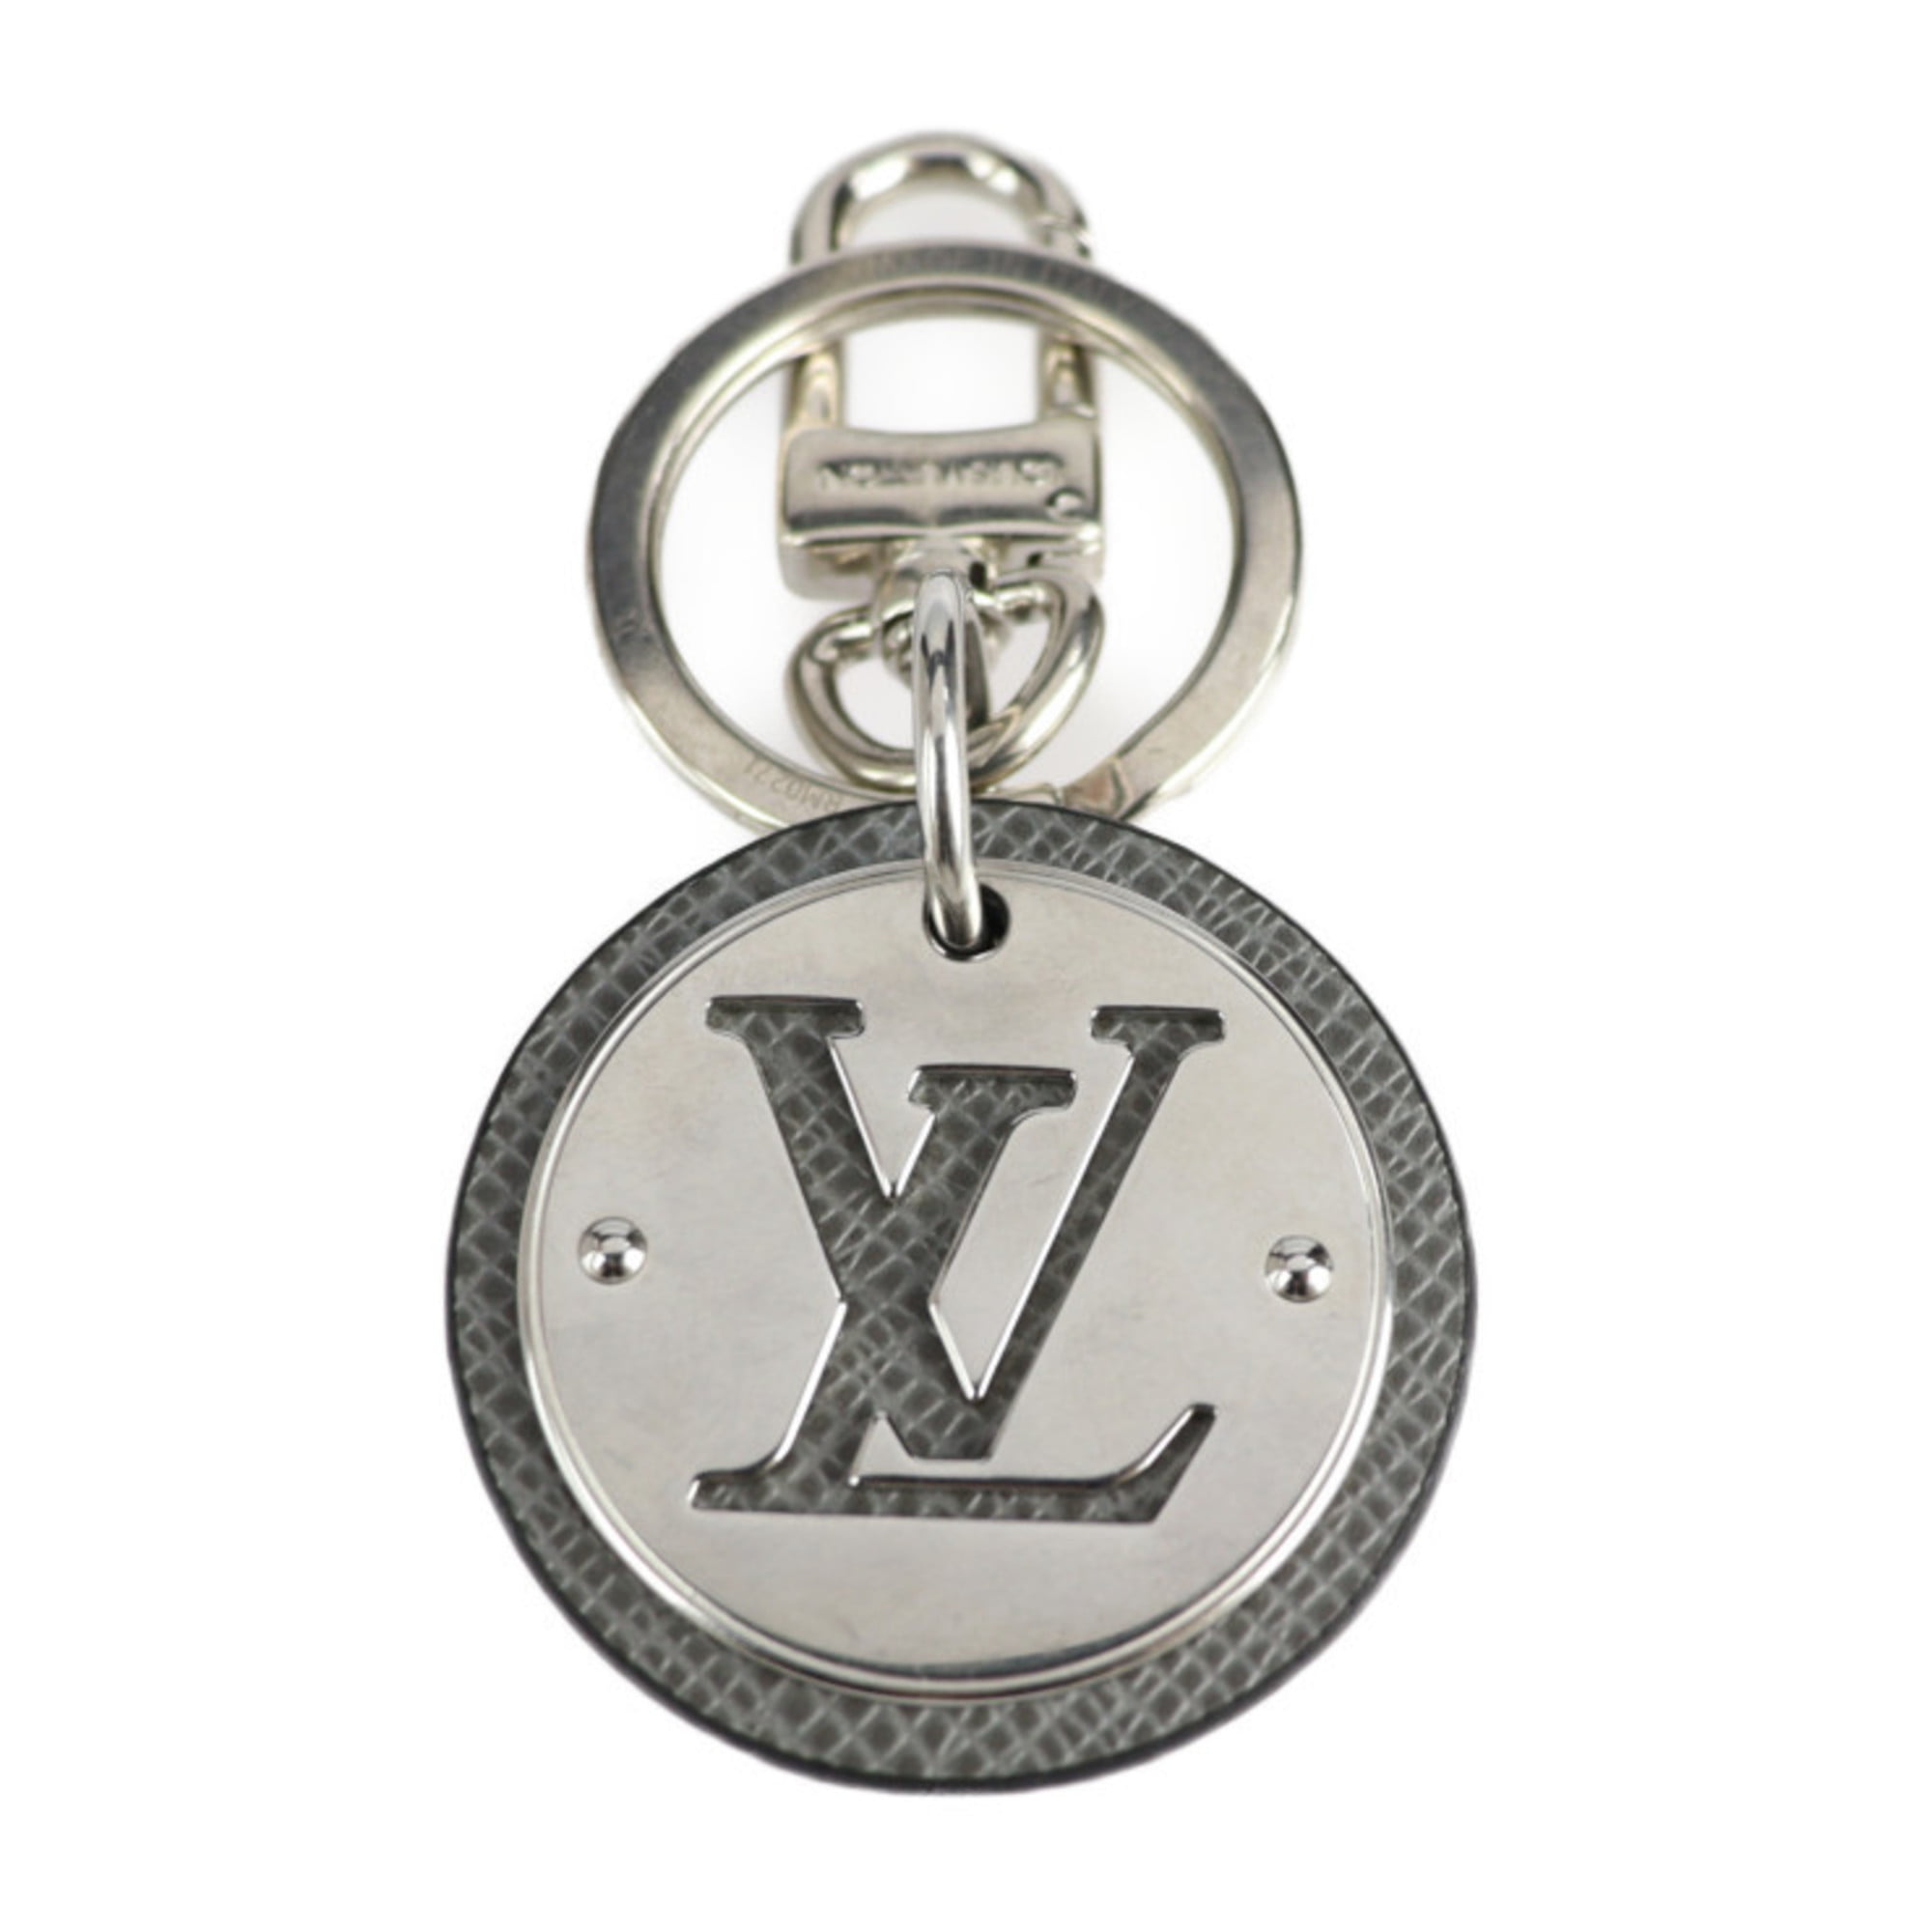 LOUIS VUITTON Key ring holder chain Bag charm AUTH Porto Cle